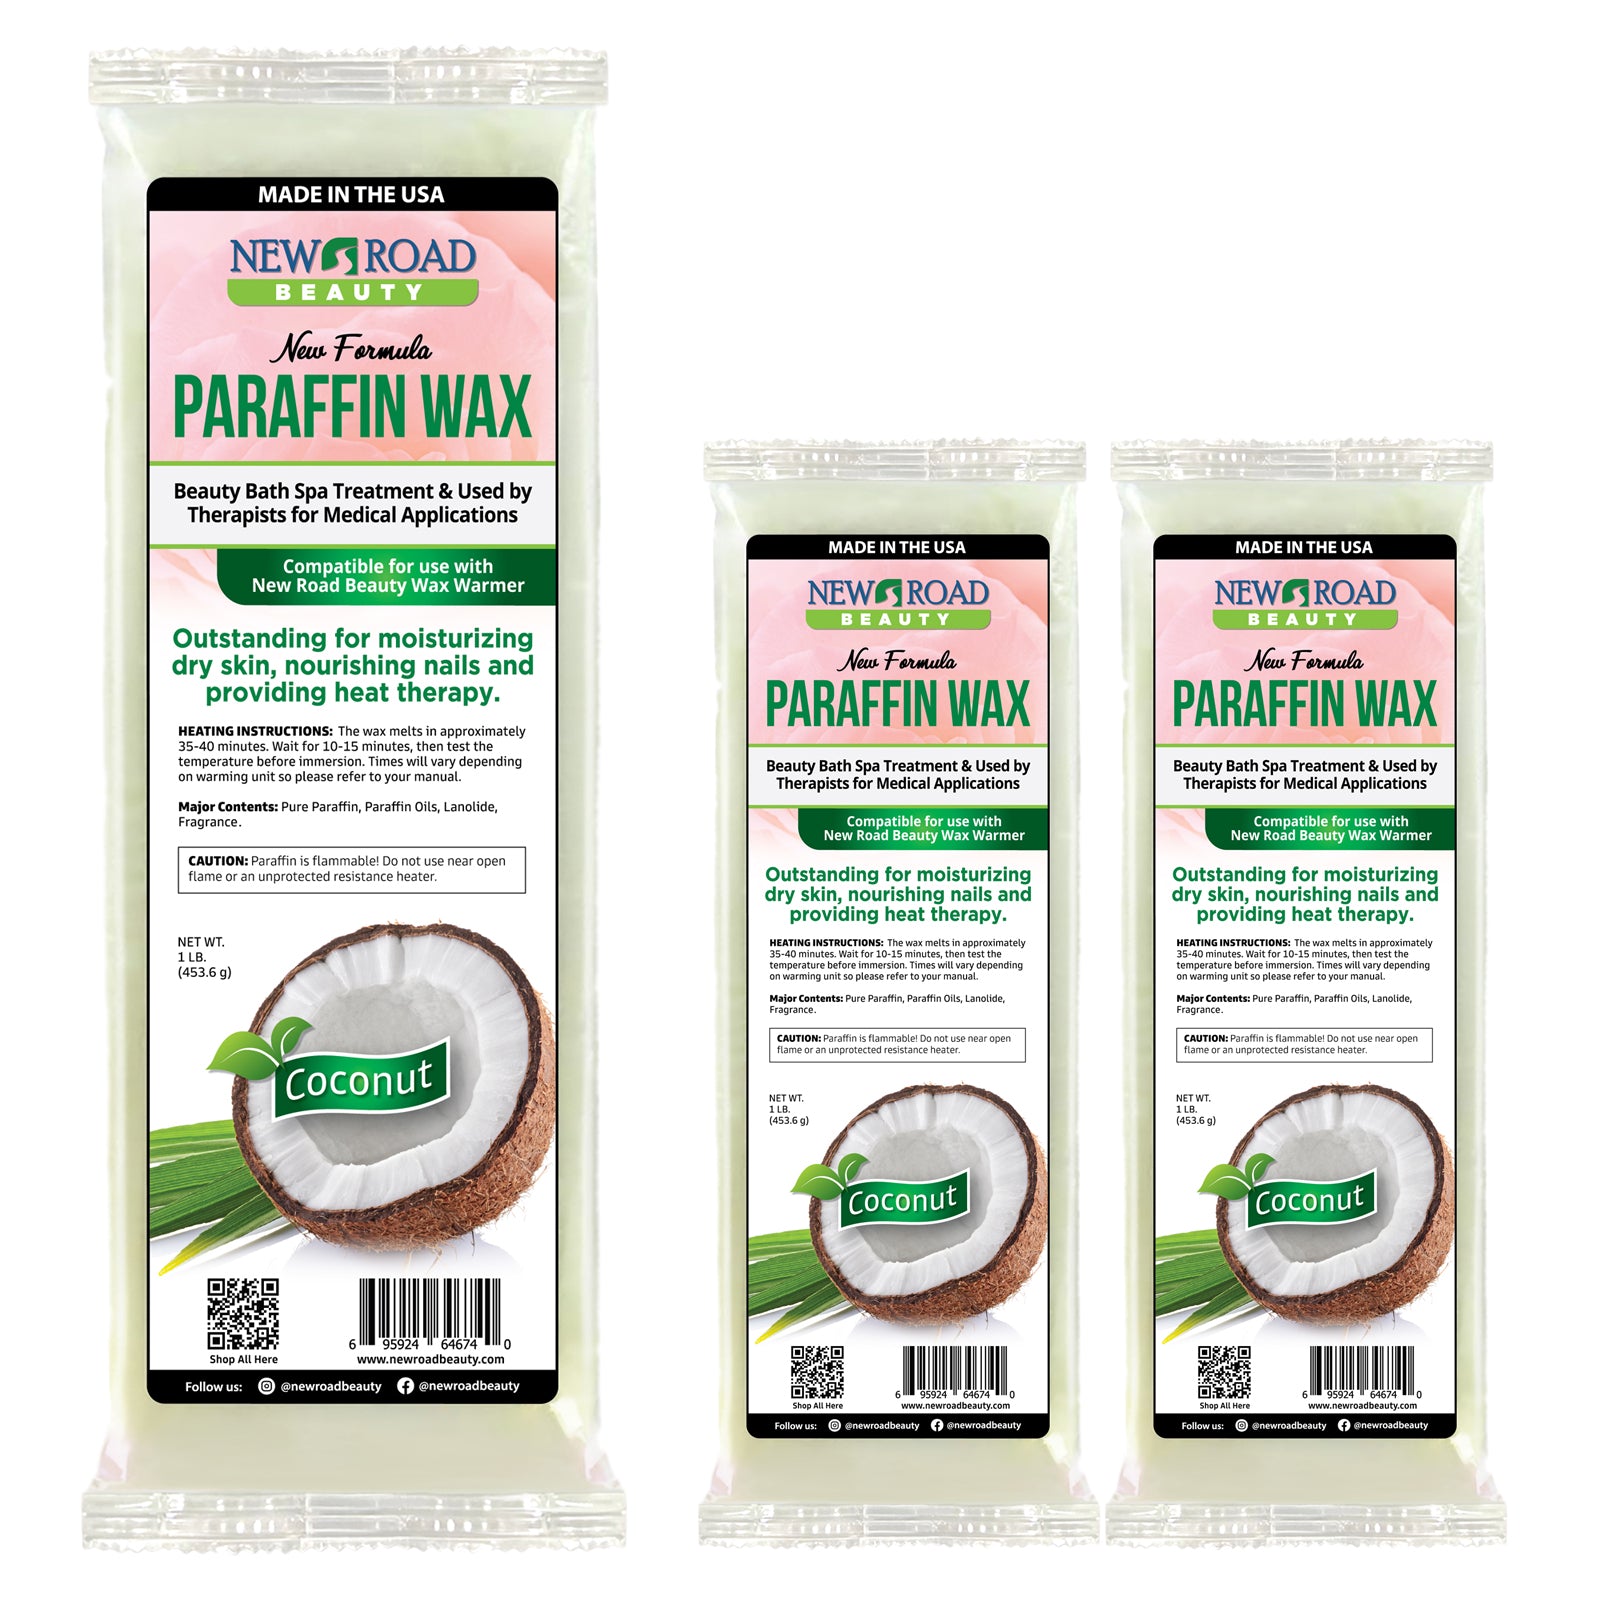 Peach Paraffin Wax Spa Treatment 6-Pack - New Road Beauty